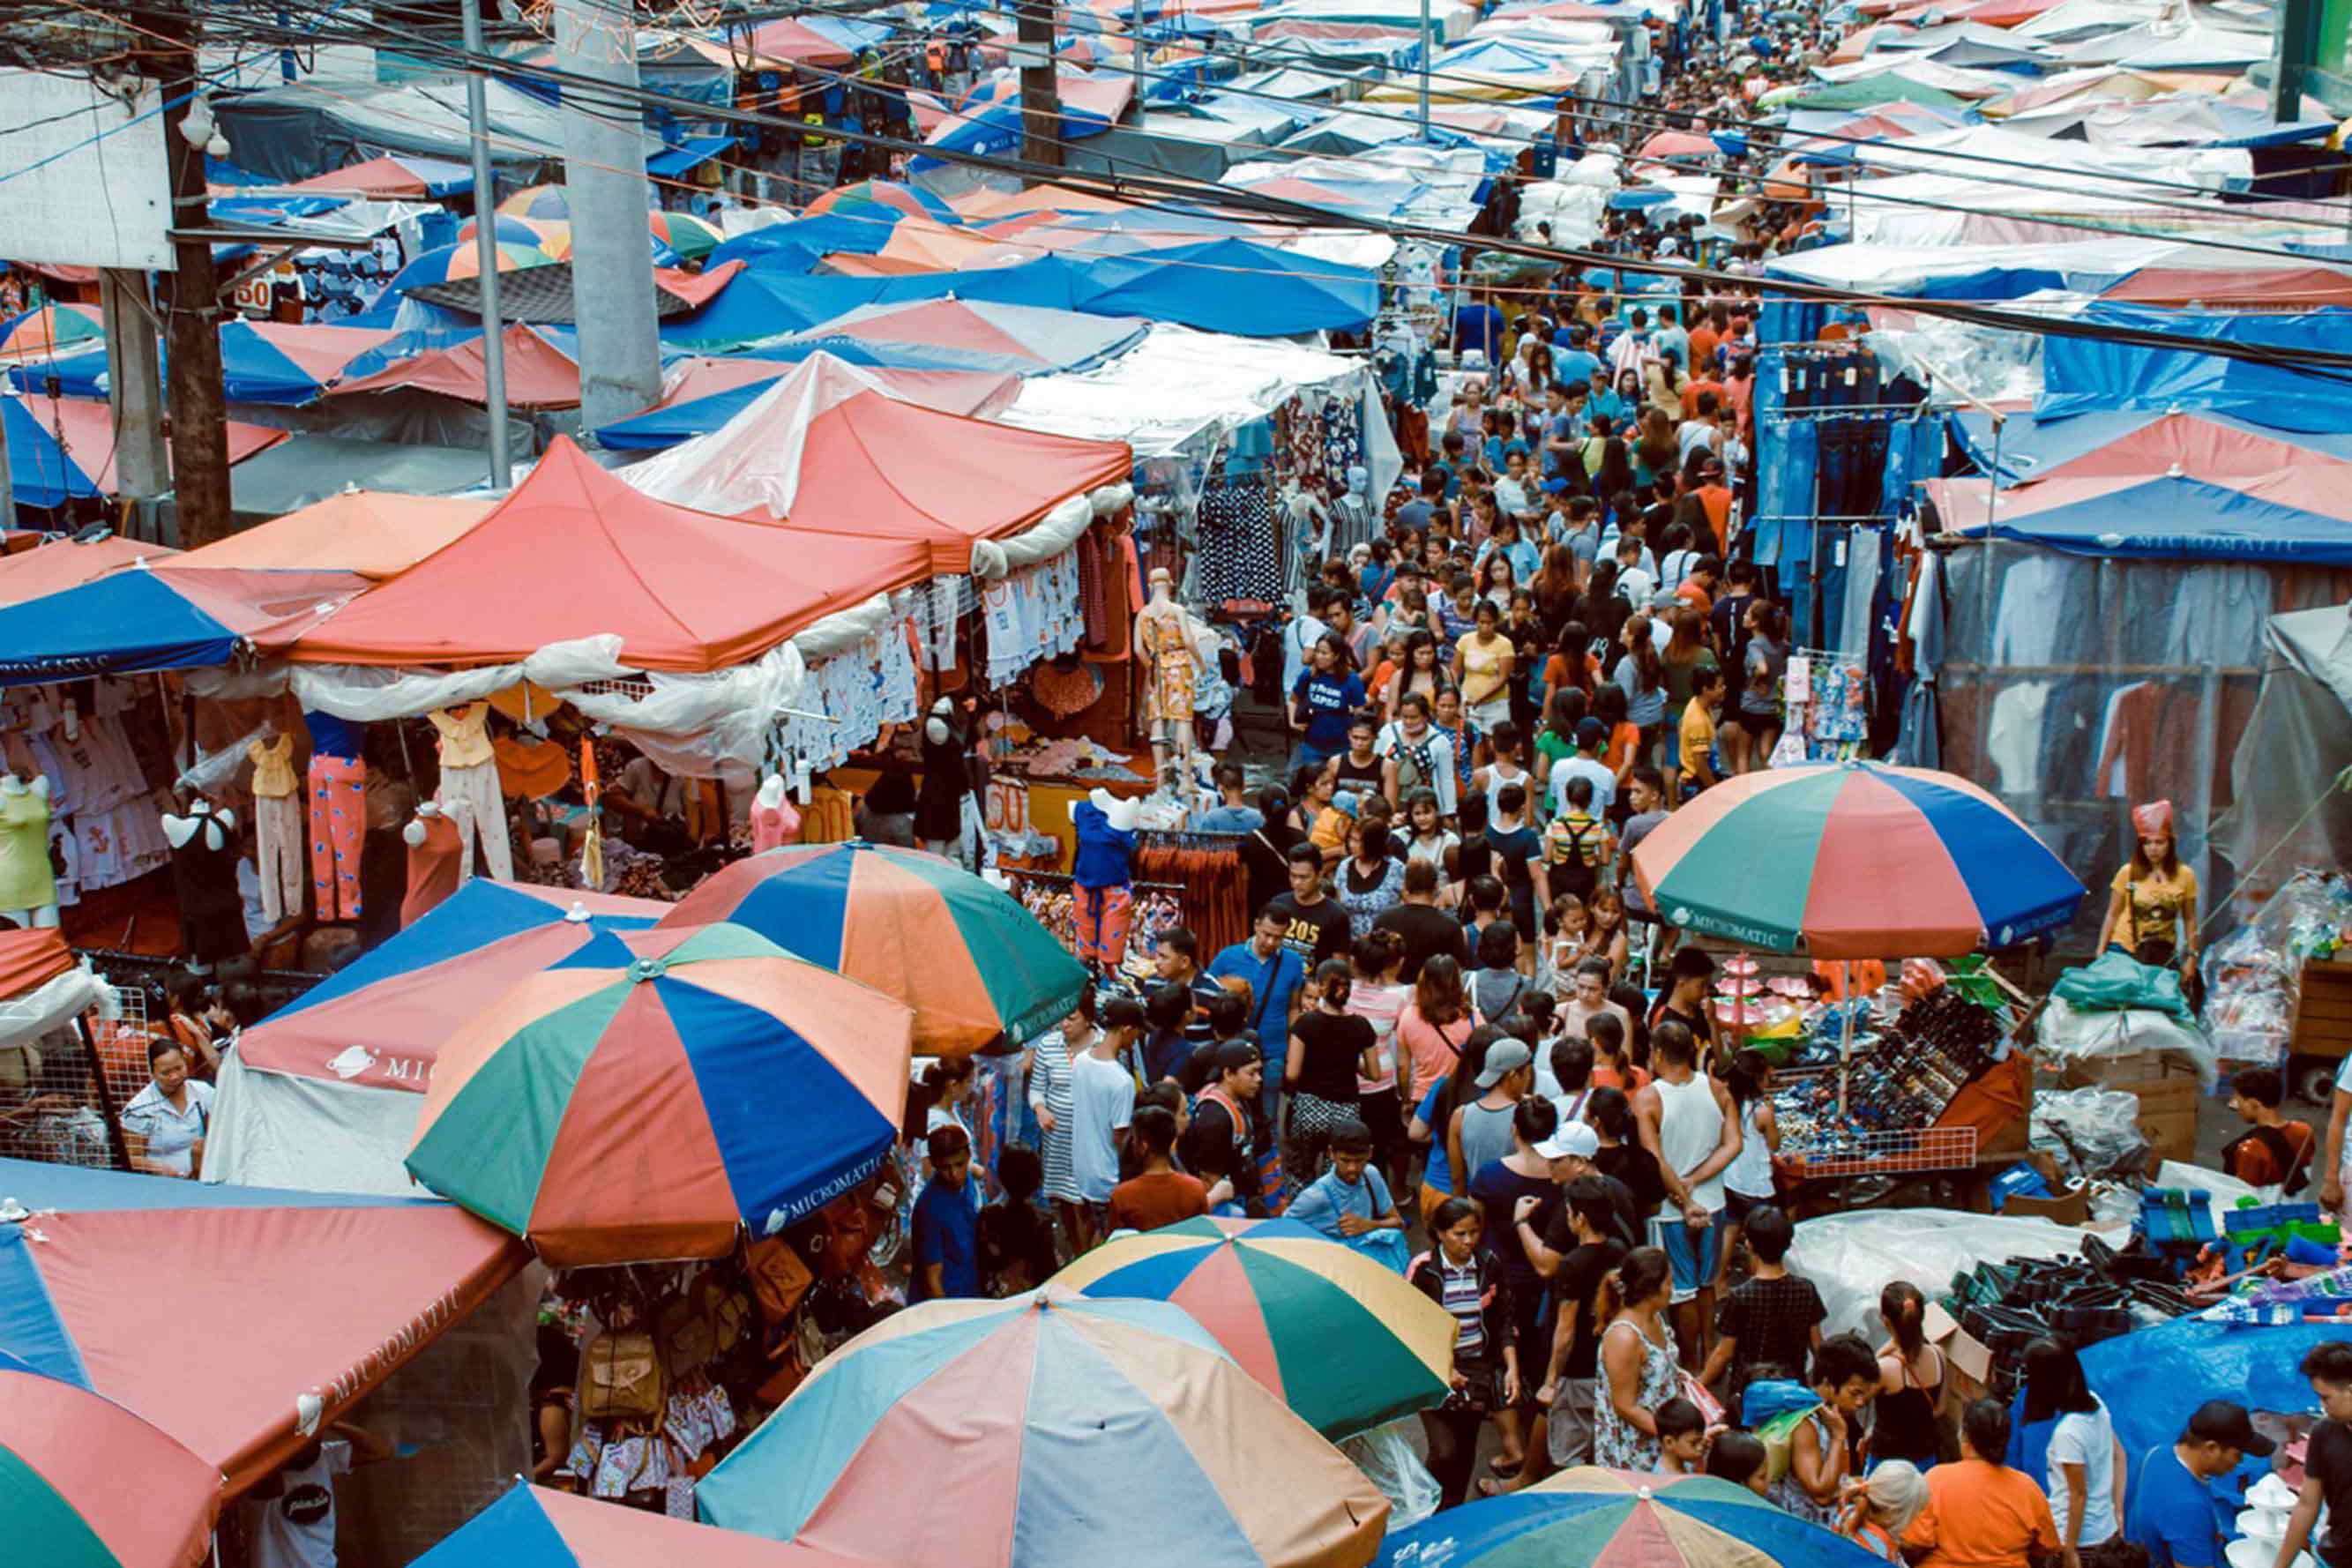 Crowded Street Market